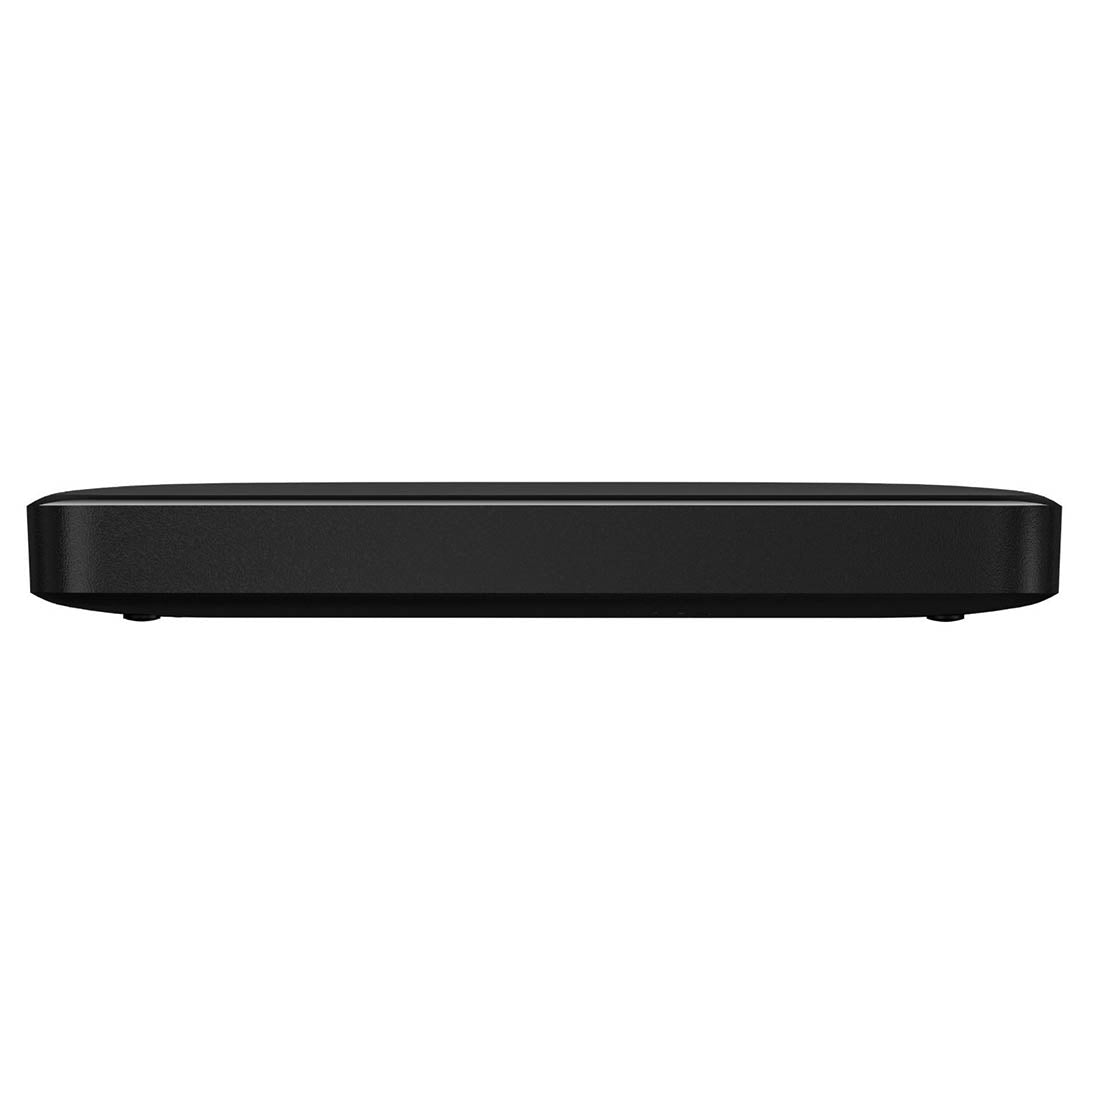 Western Digital Elements 1TB USB 3.0 पोर्टेबल बाहरी हार्ड ड्राइव (काला)